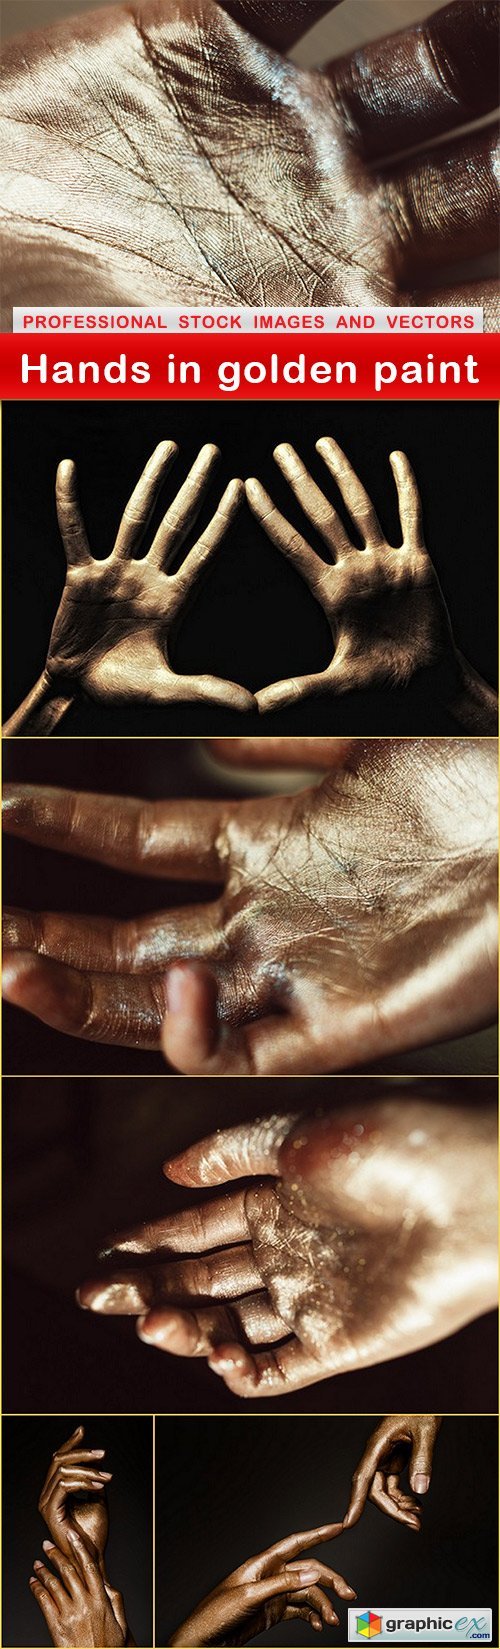 Hands in golden paint - 6 UHQ JPEG